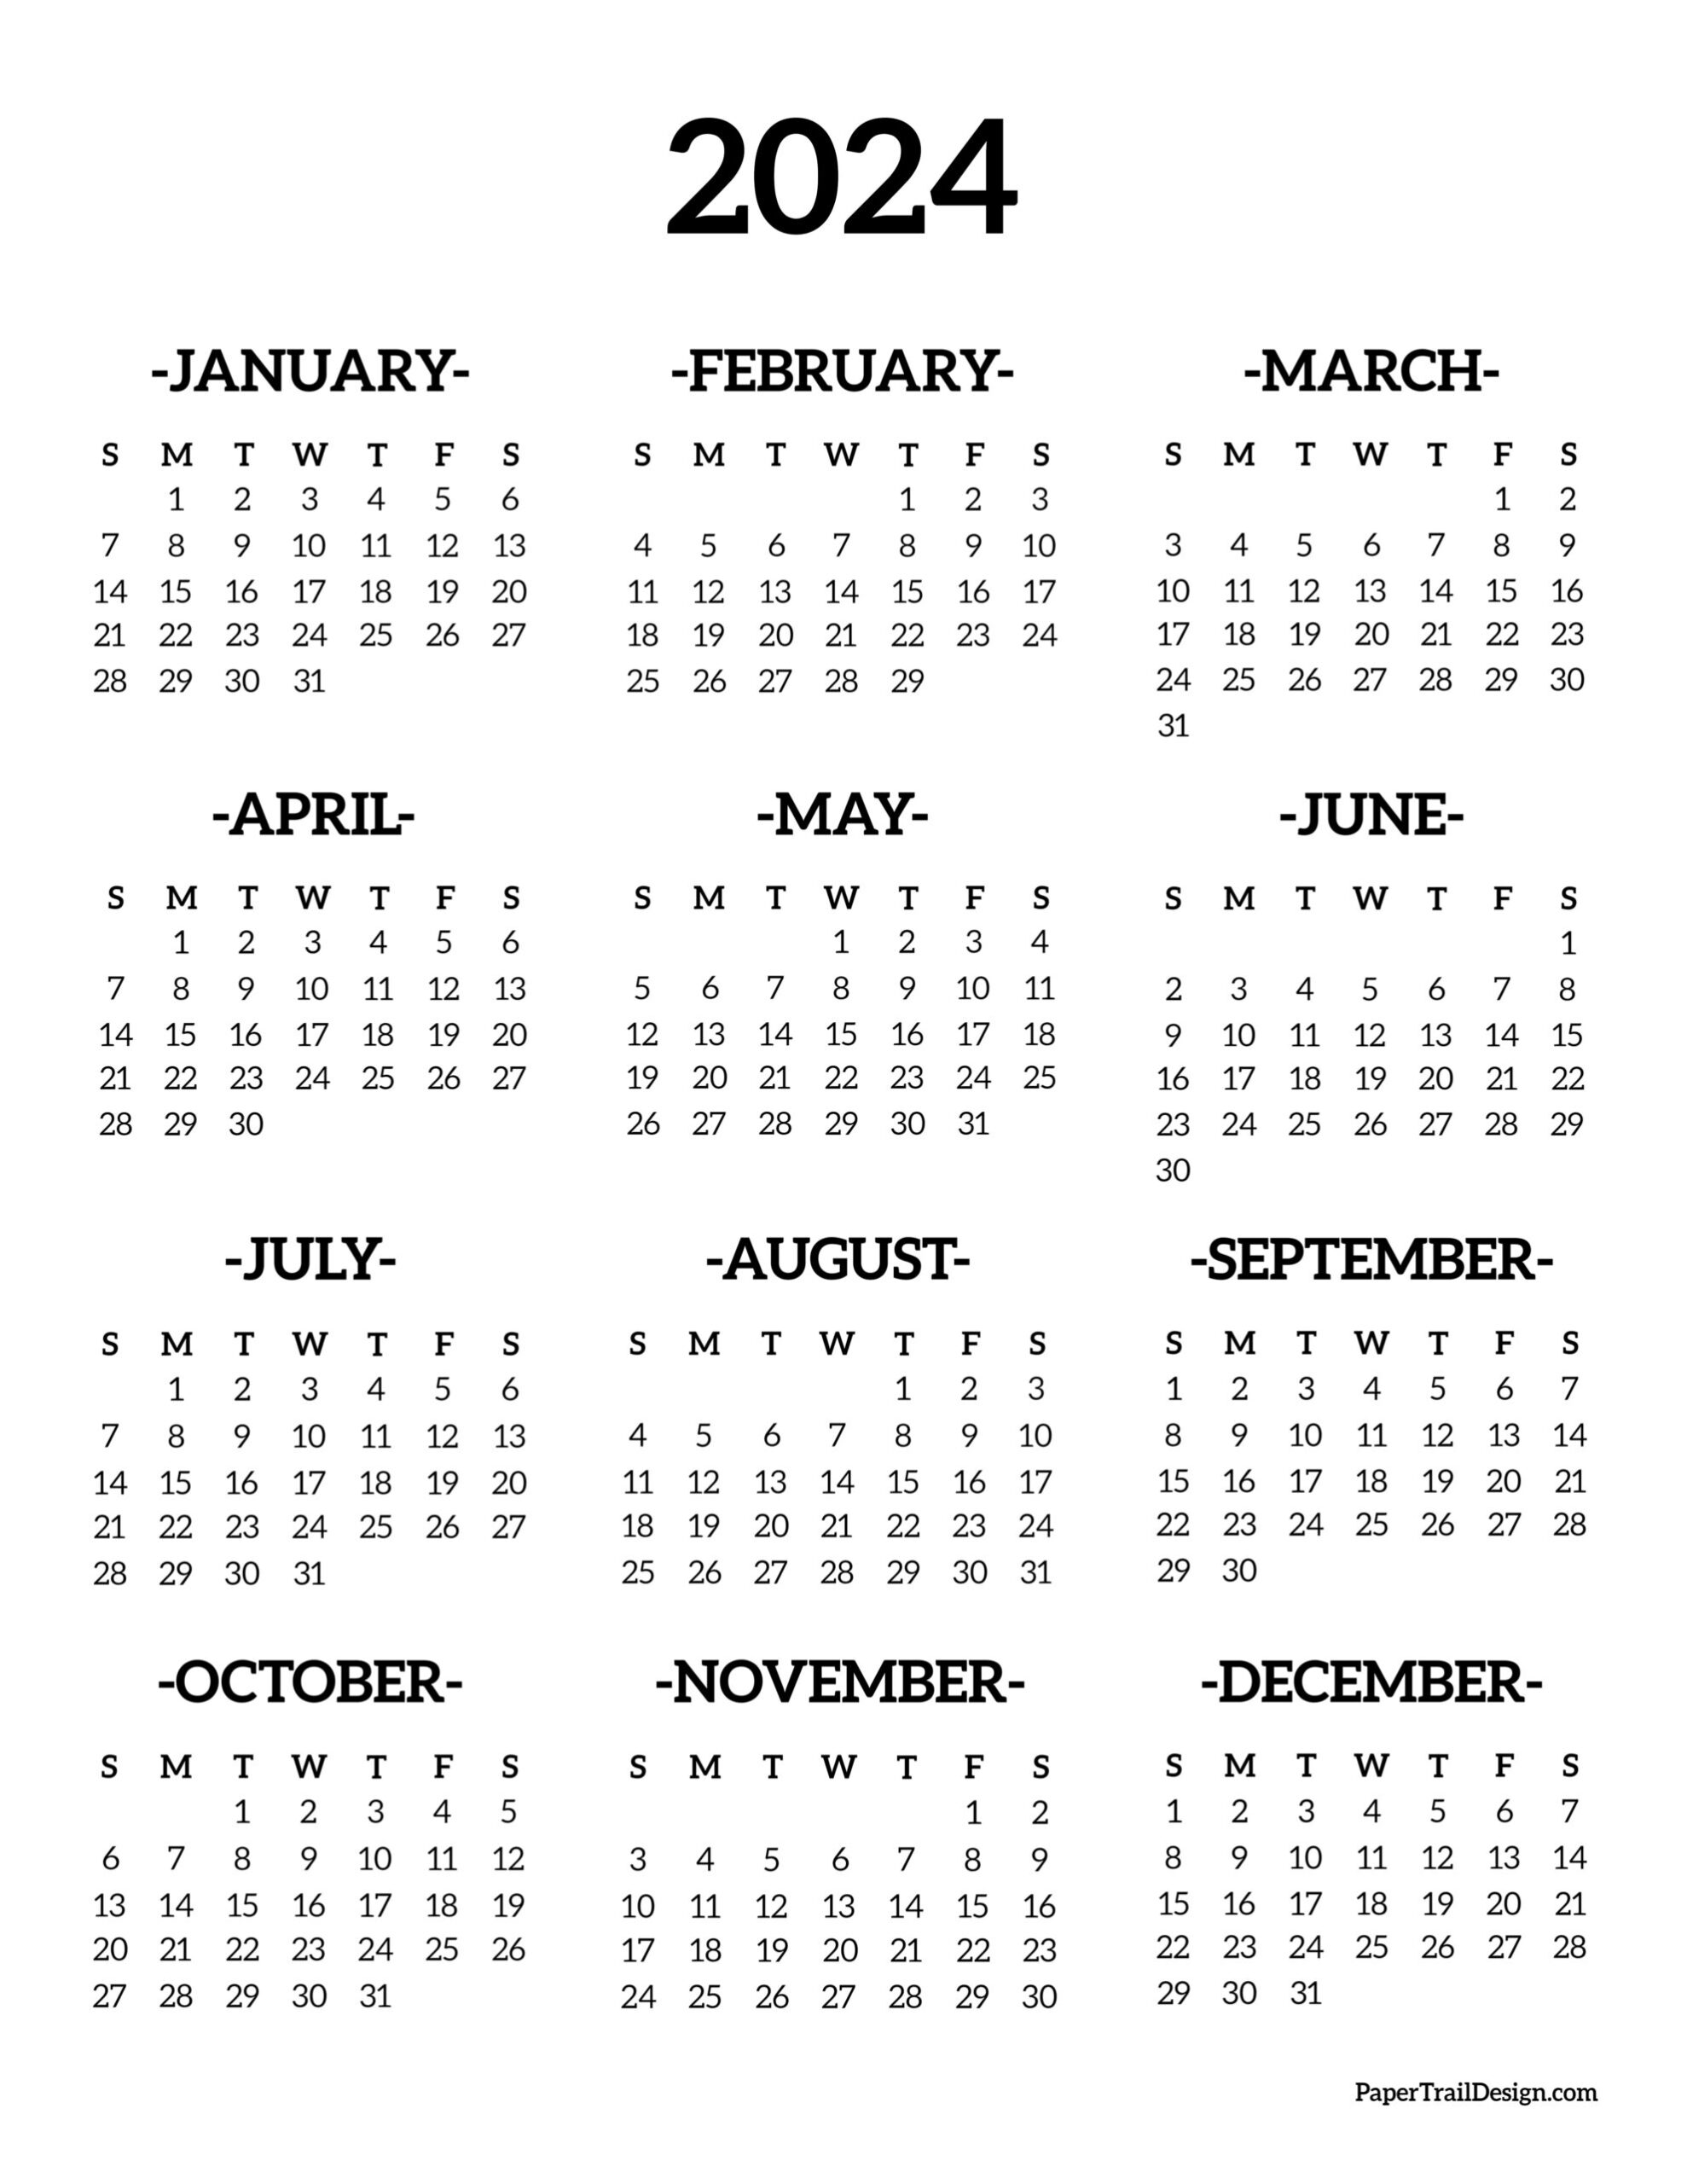 Calendar 2024 Printable One Page - Paper Trail Design for Calendar Printable 2024 Free